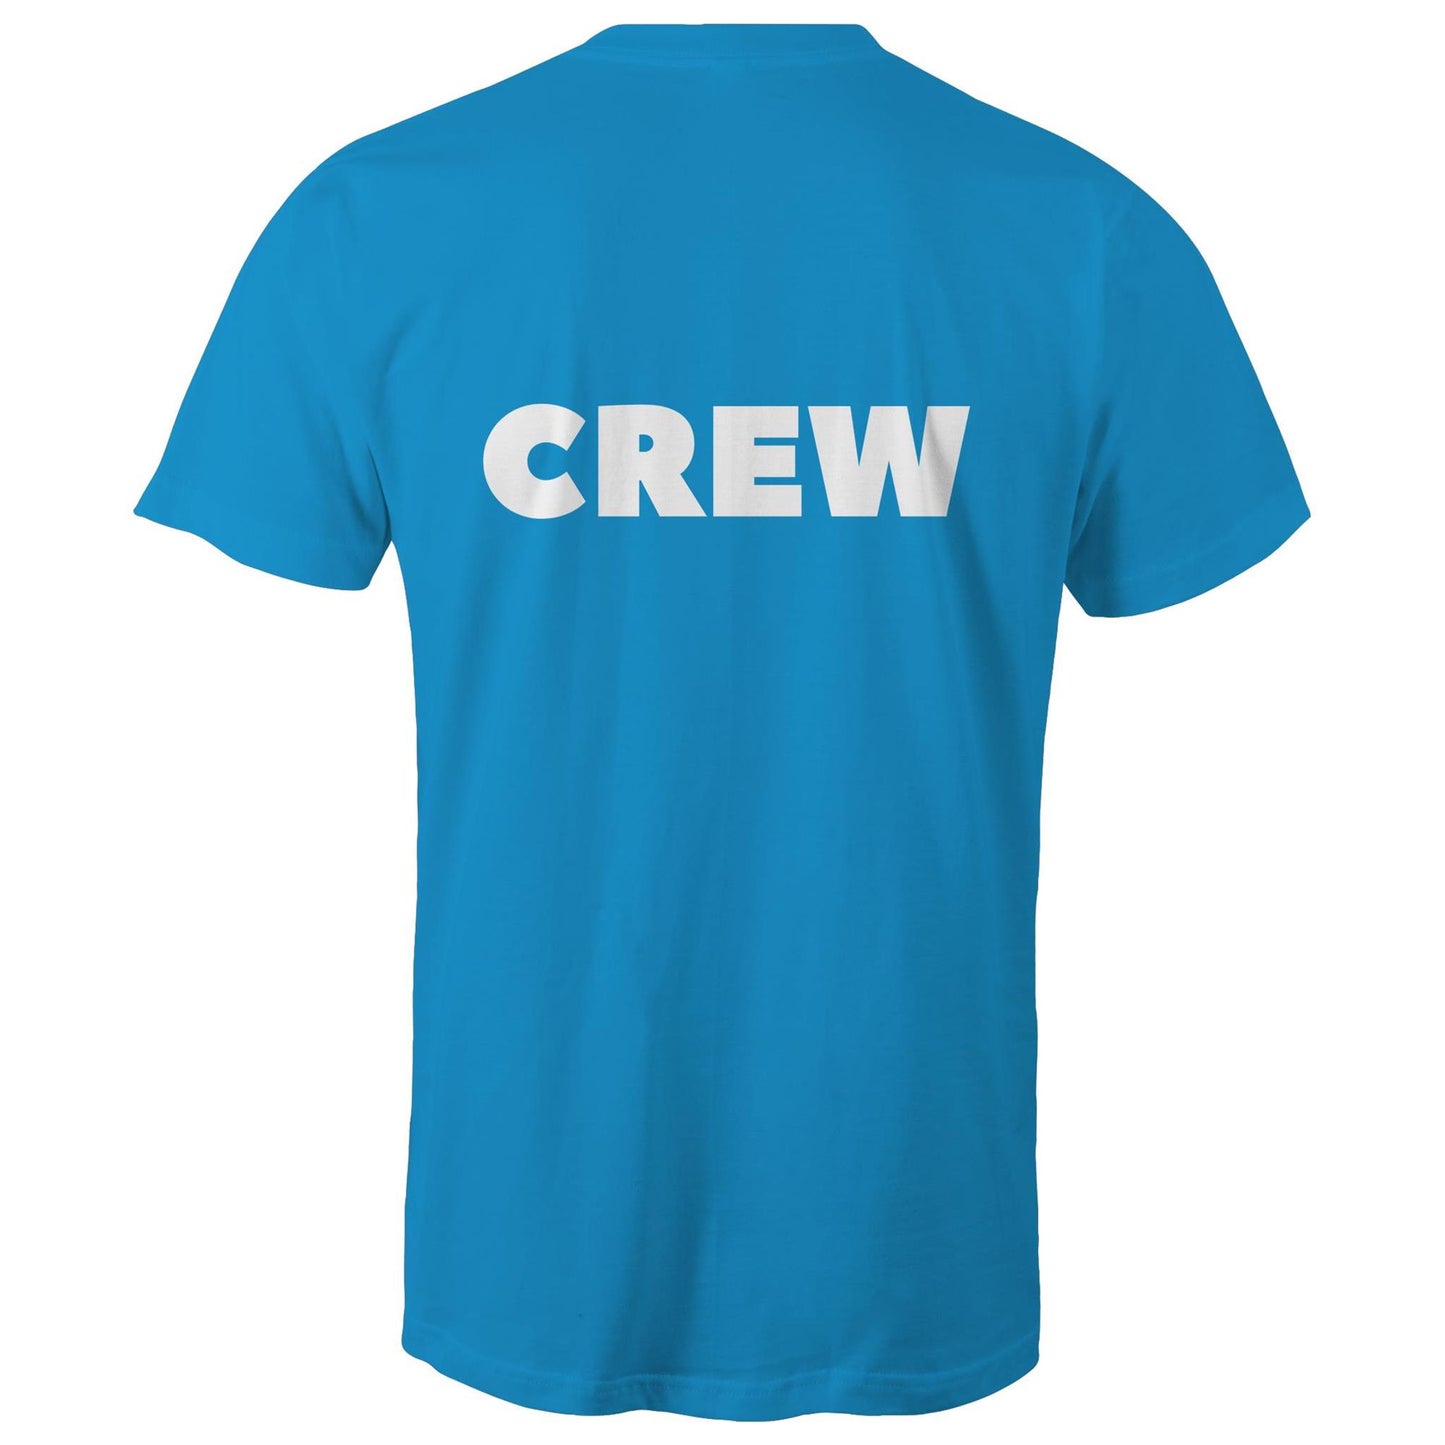 CREW - Unisex T-Shirt